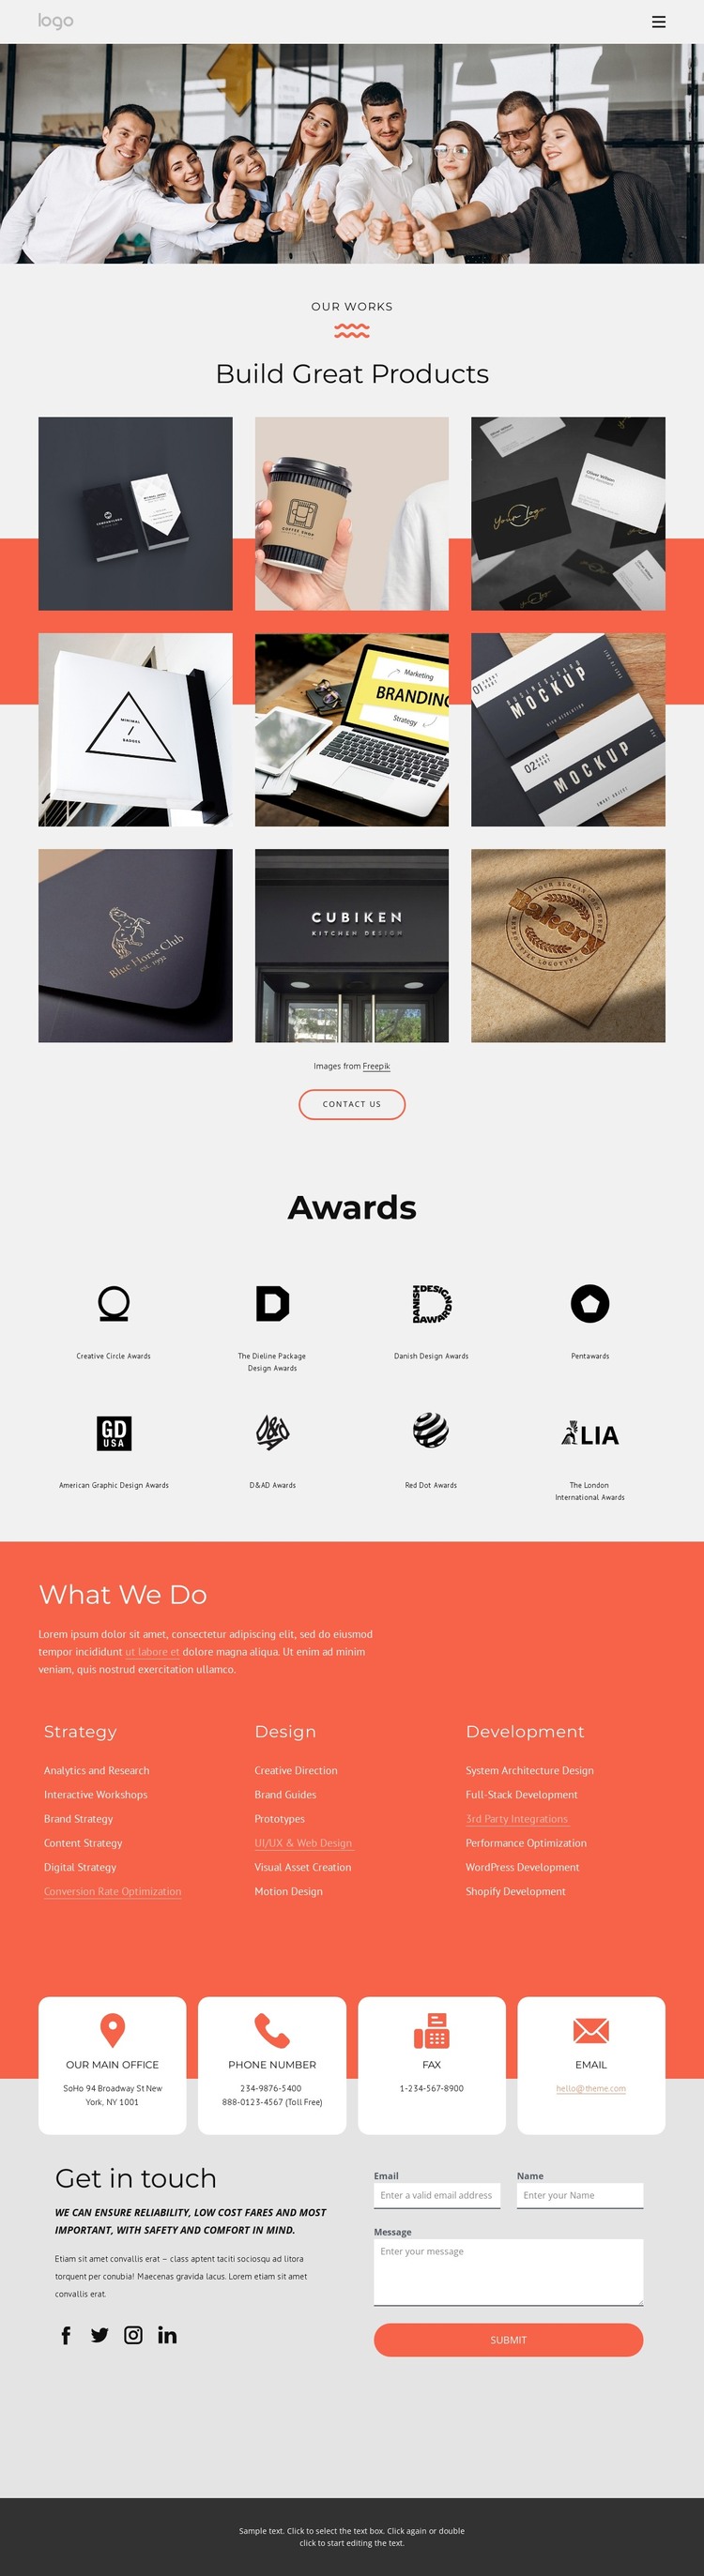 Award winning branding services Web Design